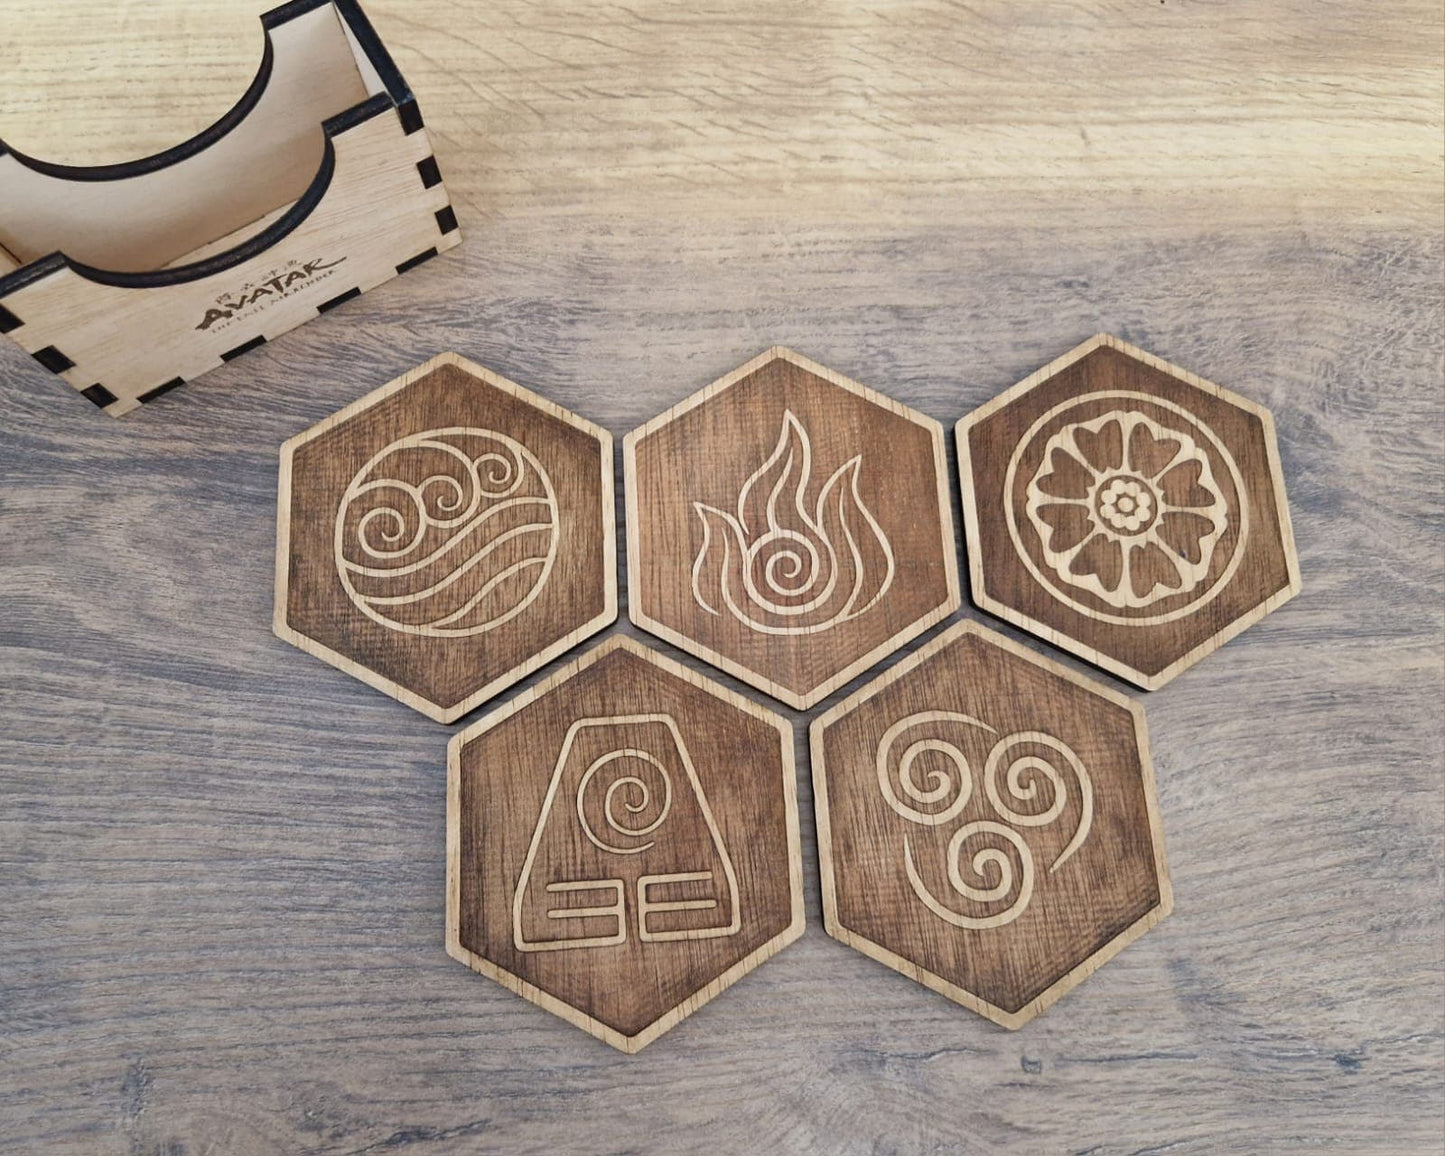 ATLA Inspired Coasters set of 5 - Avatar Fan Gift - Home Decor - Present - Housewarming Gift - Avatar the last Airbender, White Lotus